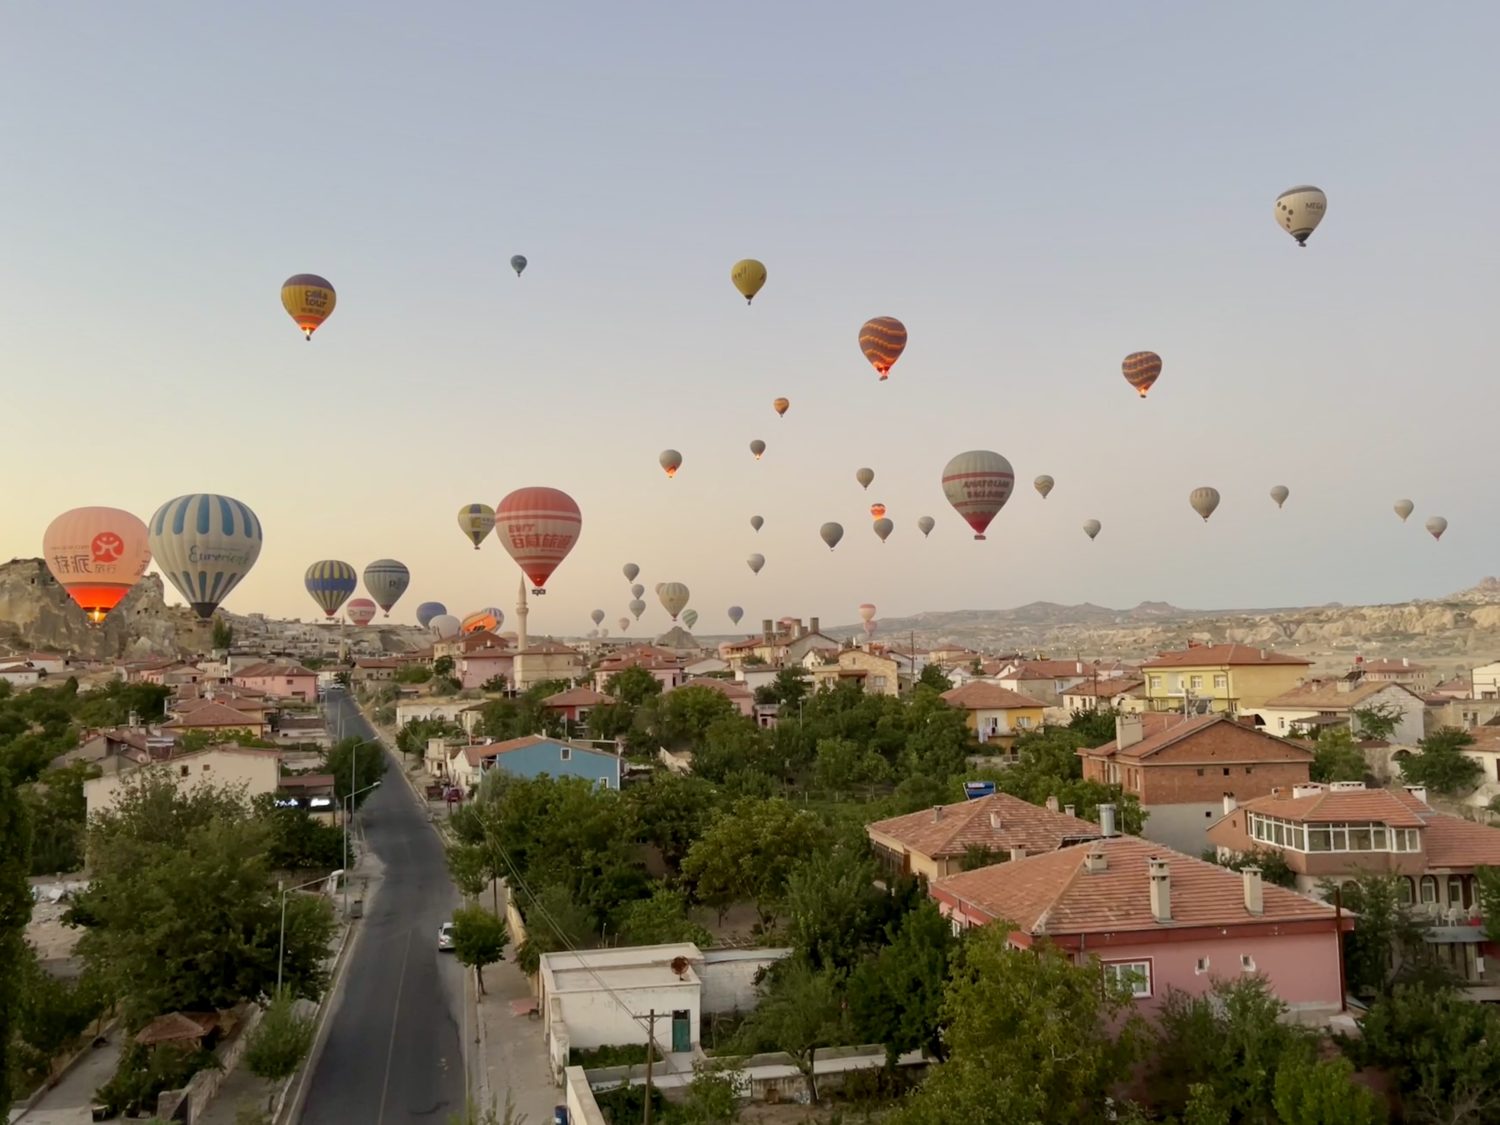 Opvoeding Knooppunt capaciteit Bucket List, Check: A Magical Cappadocia Hot Air Balloon Ride